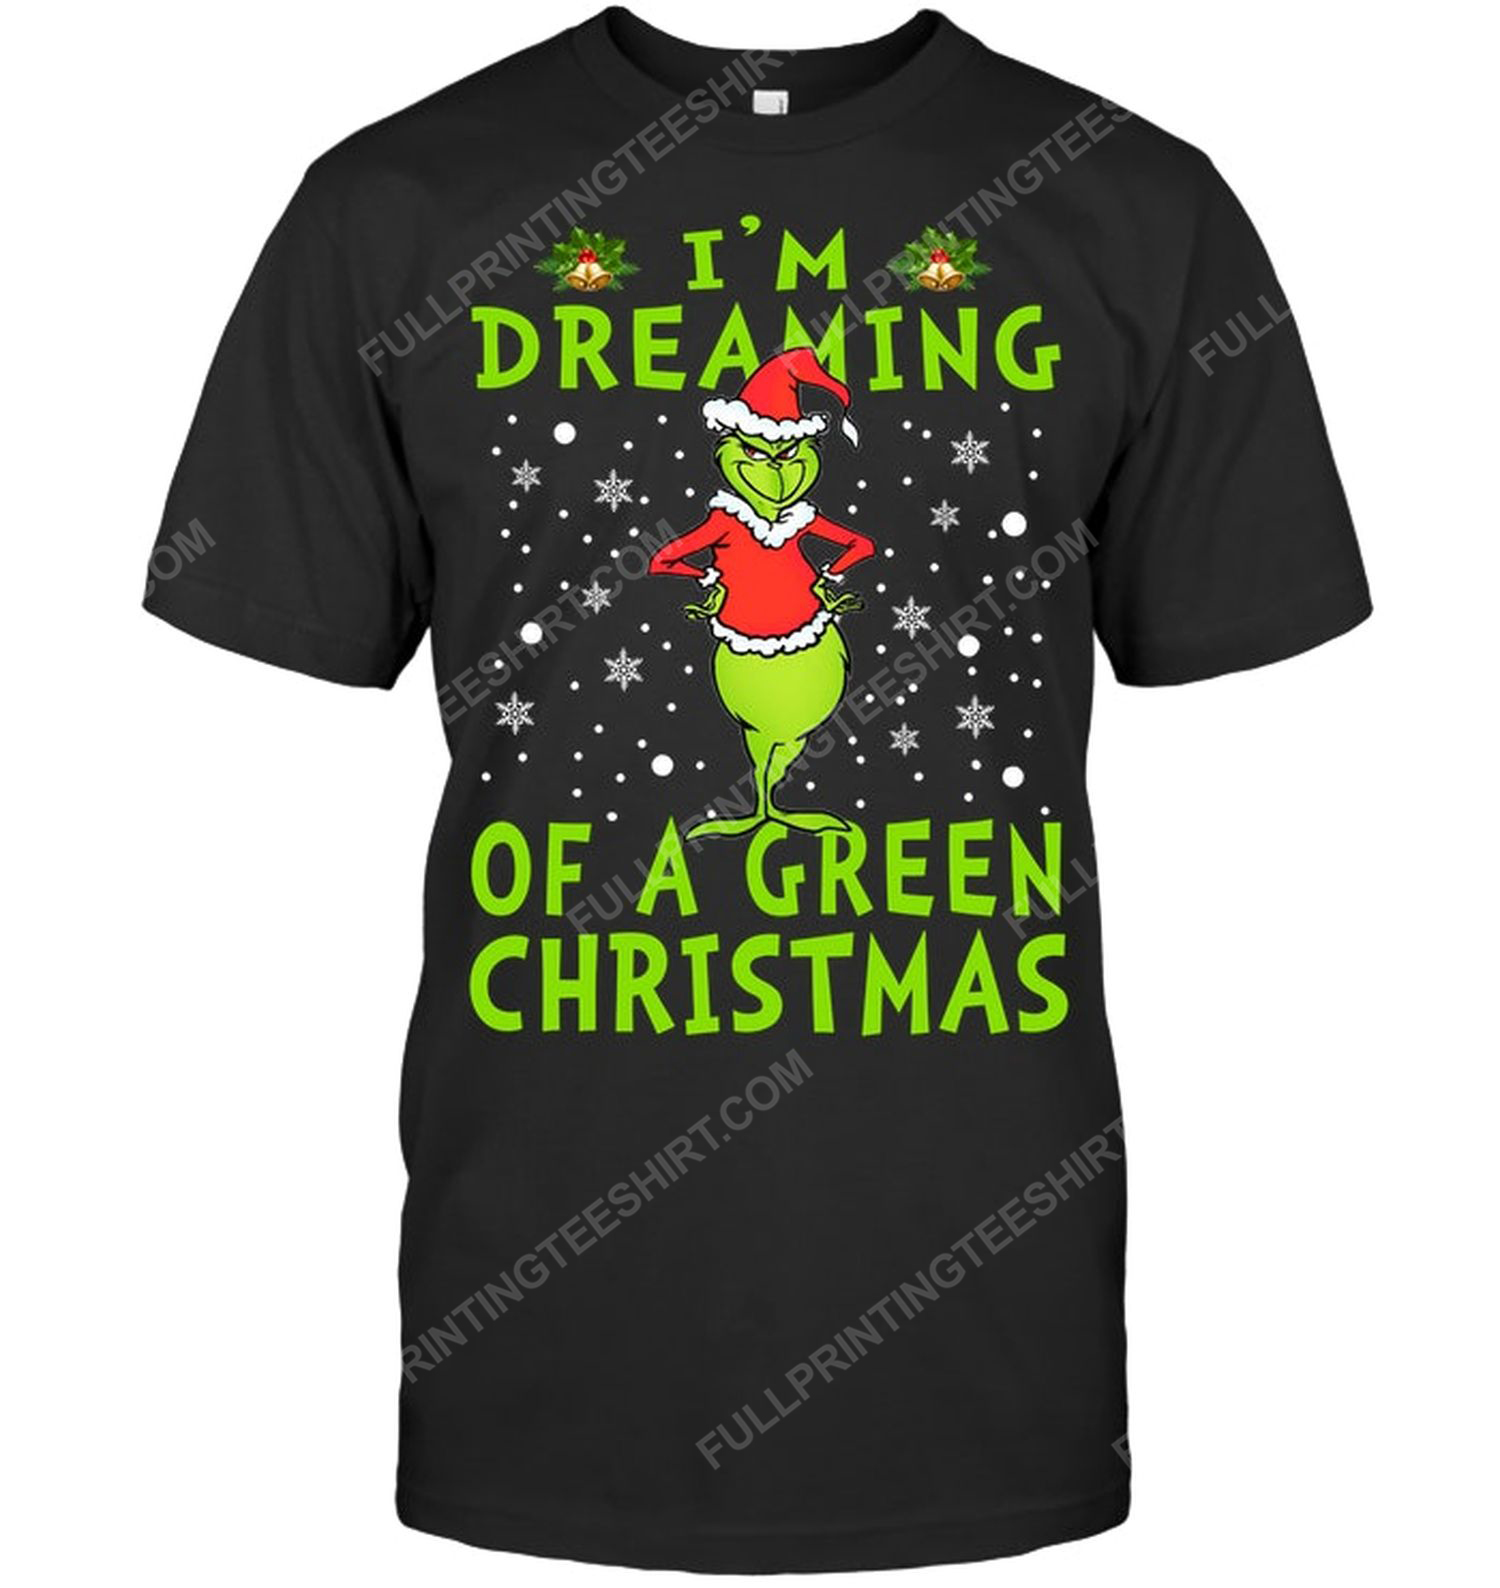 Christmas time i'm dreaming of a green christmas tshirt